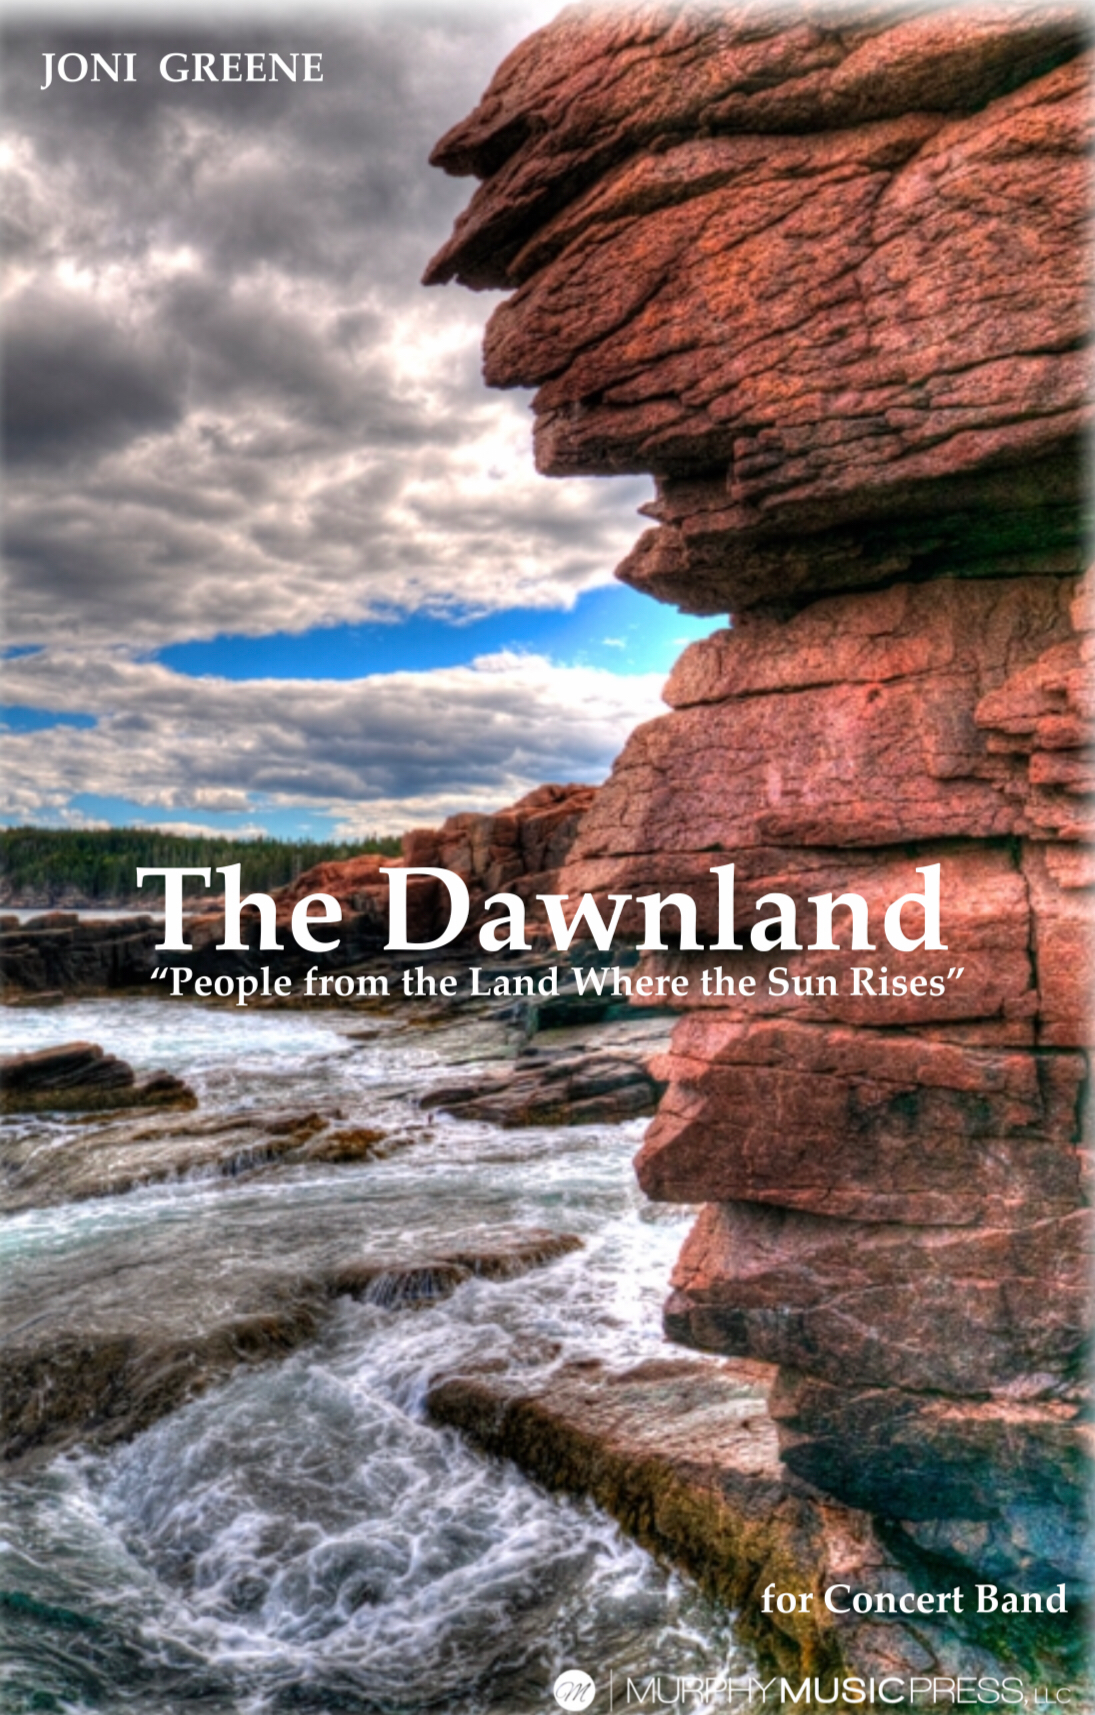 The Dawnland by Joni Greene